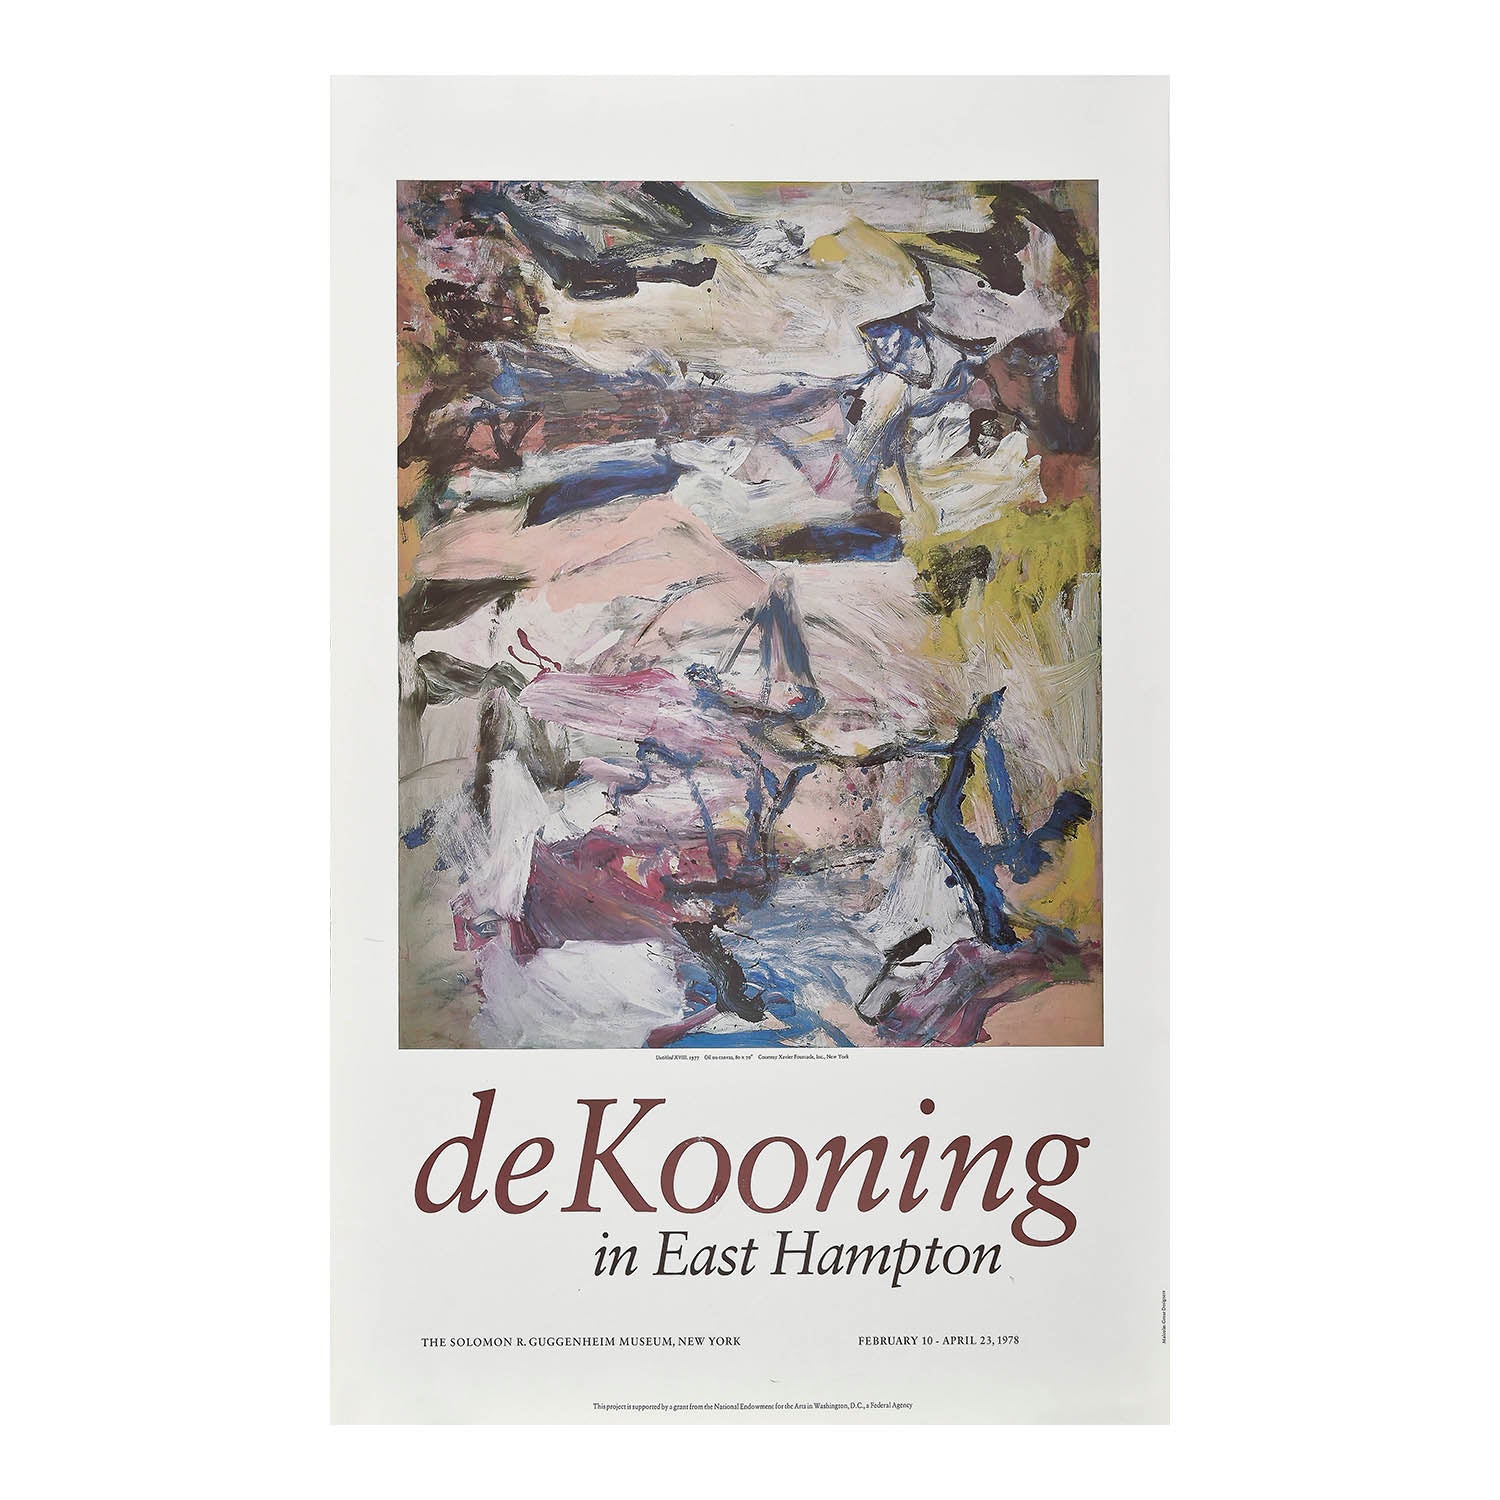 art exhibition poster, de Kooning in East Hampton, held at the The Solomon R. Guggenheim Museum, New York 1978. The design features North Atlantic Light (Untitled XVIII), 1977, by Willem de Kooning